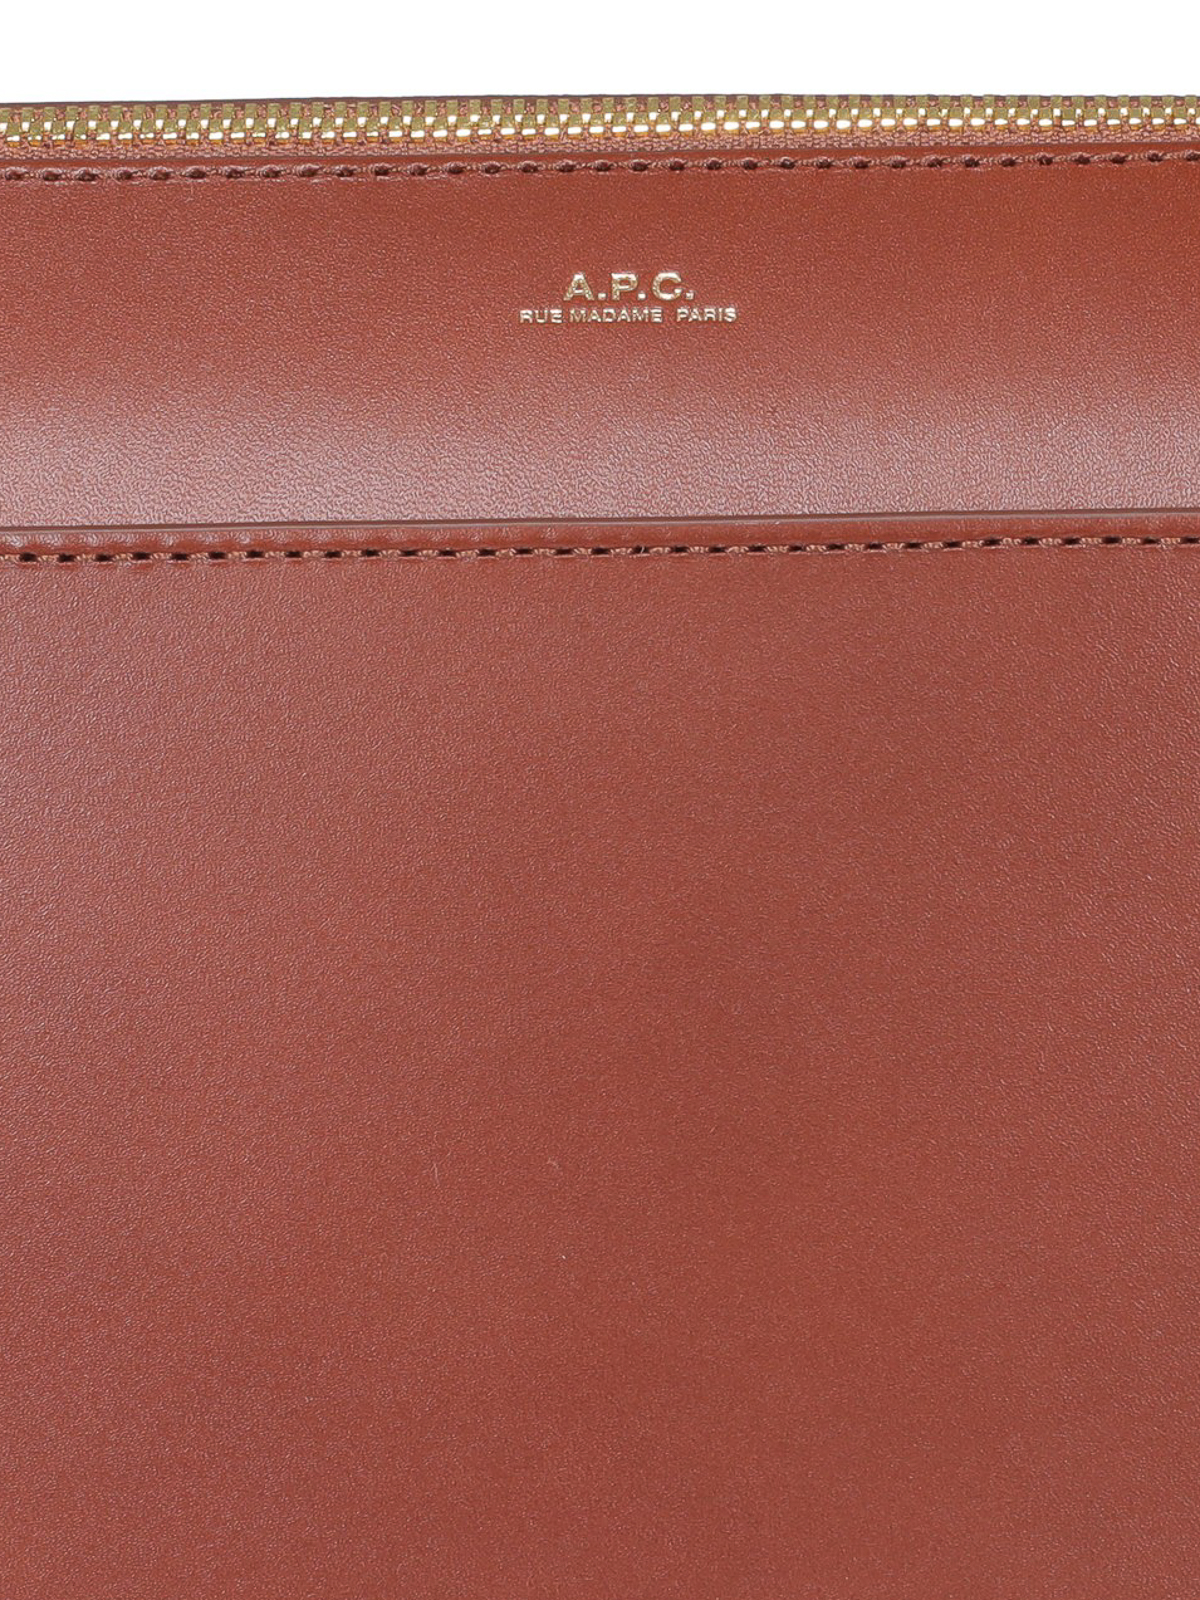 A.P.C. - Ella - Crocodile-Effect Leather Shoulder Bag - Burgundy